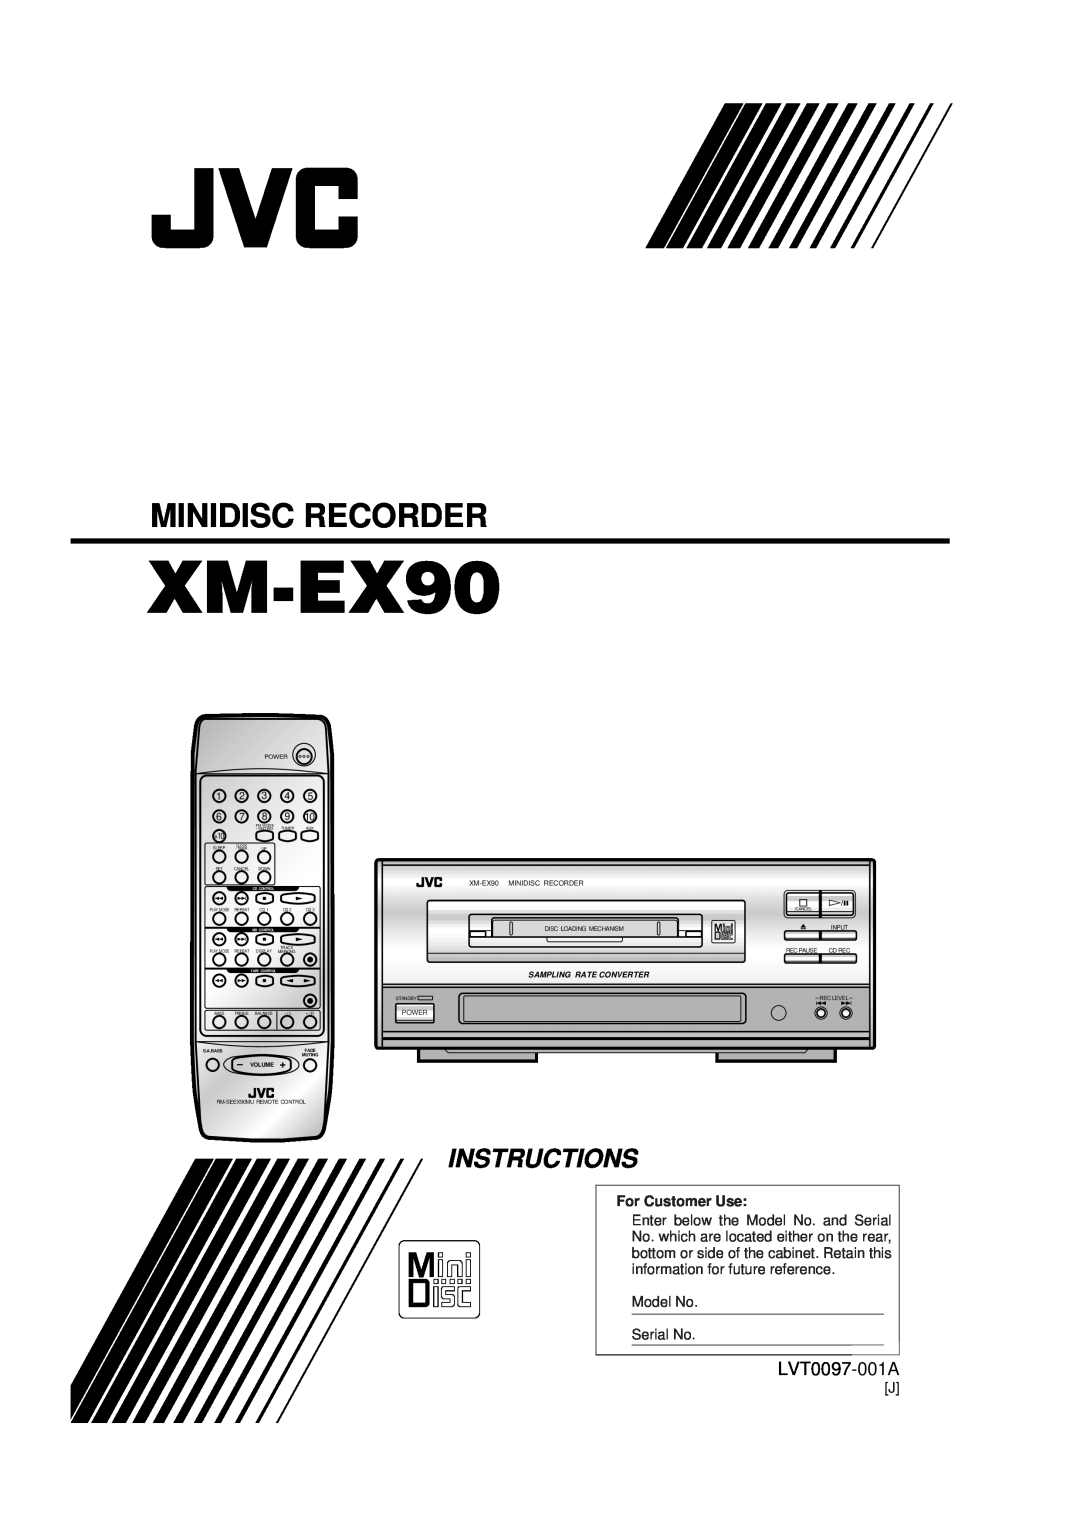 JVC XM-EX90 manual LVT0097-001A, Minidisc Recorder, Instructions, For Customer Use, Sampling Rate Converter, Power, Volume 